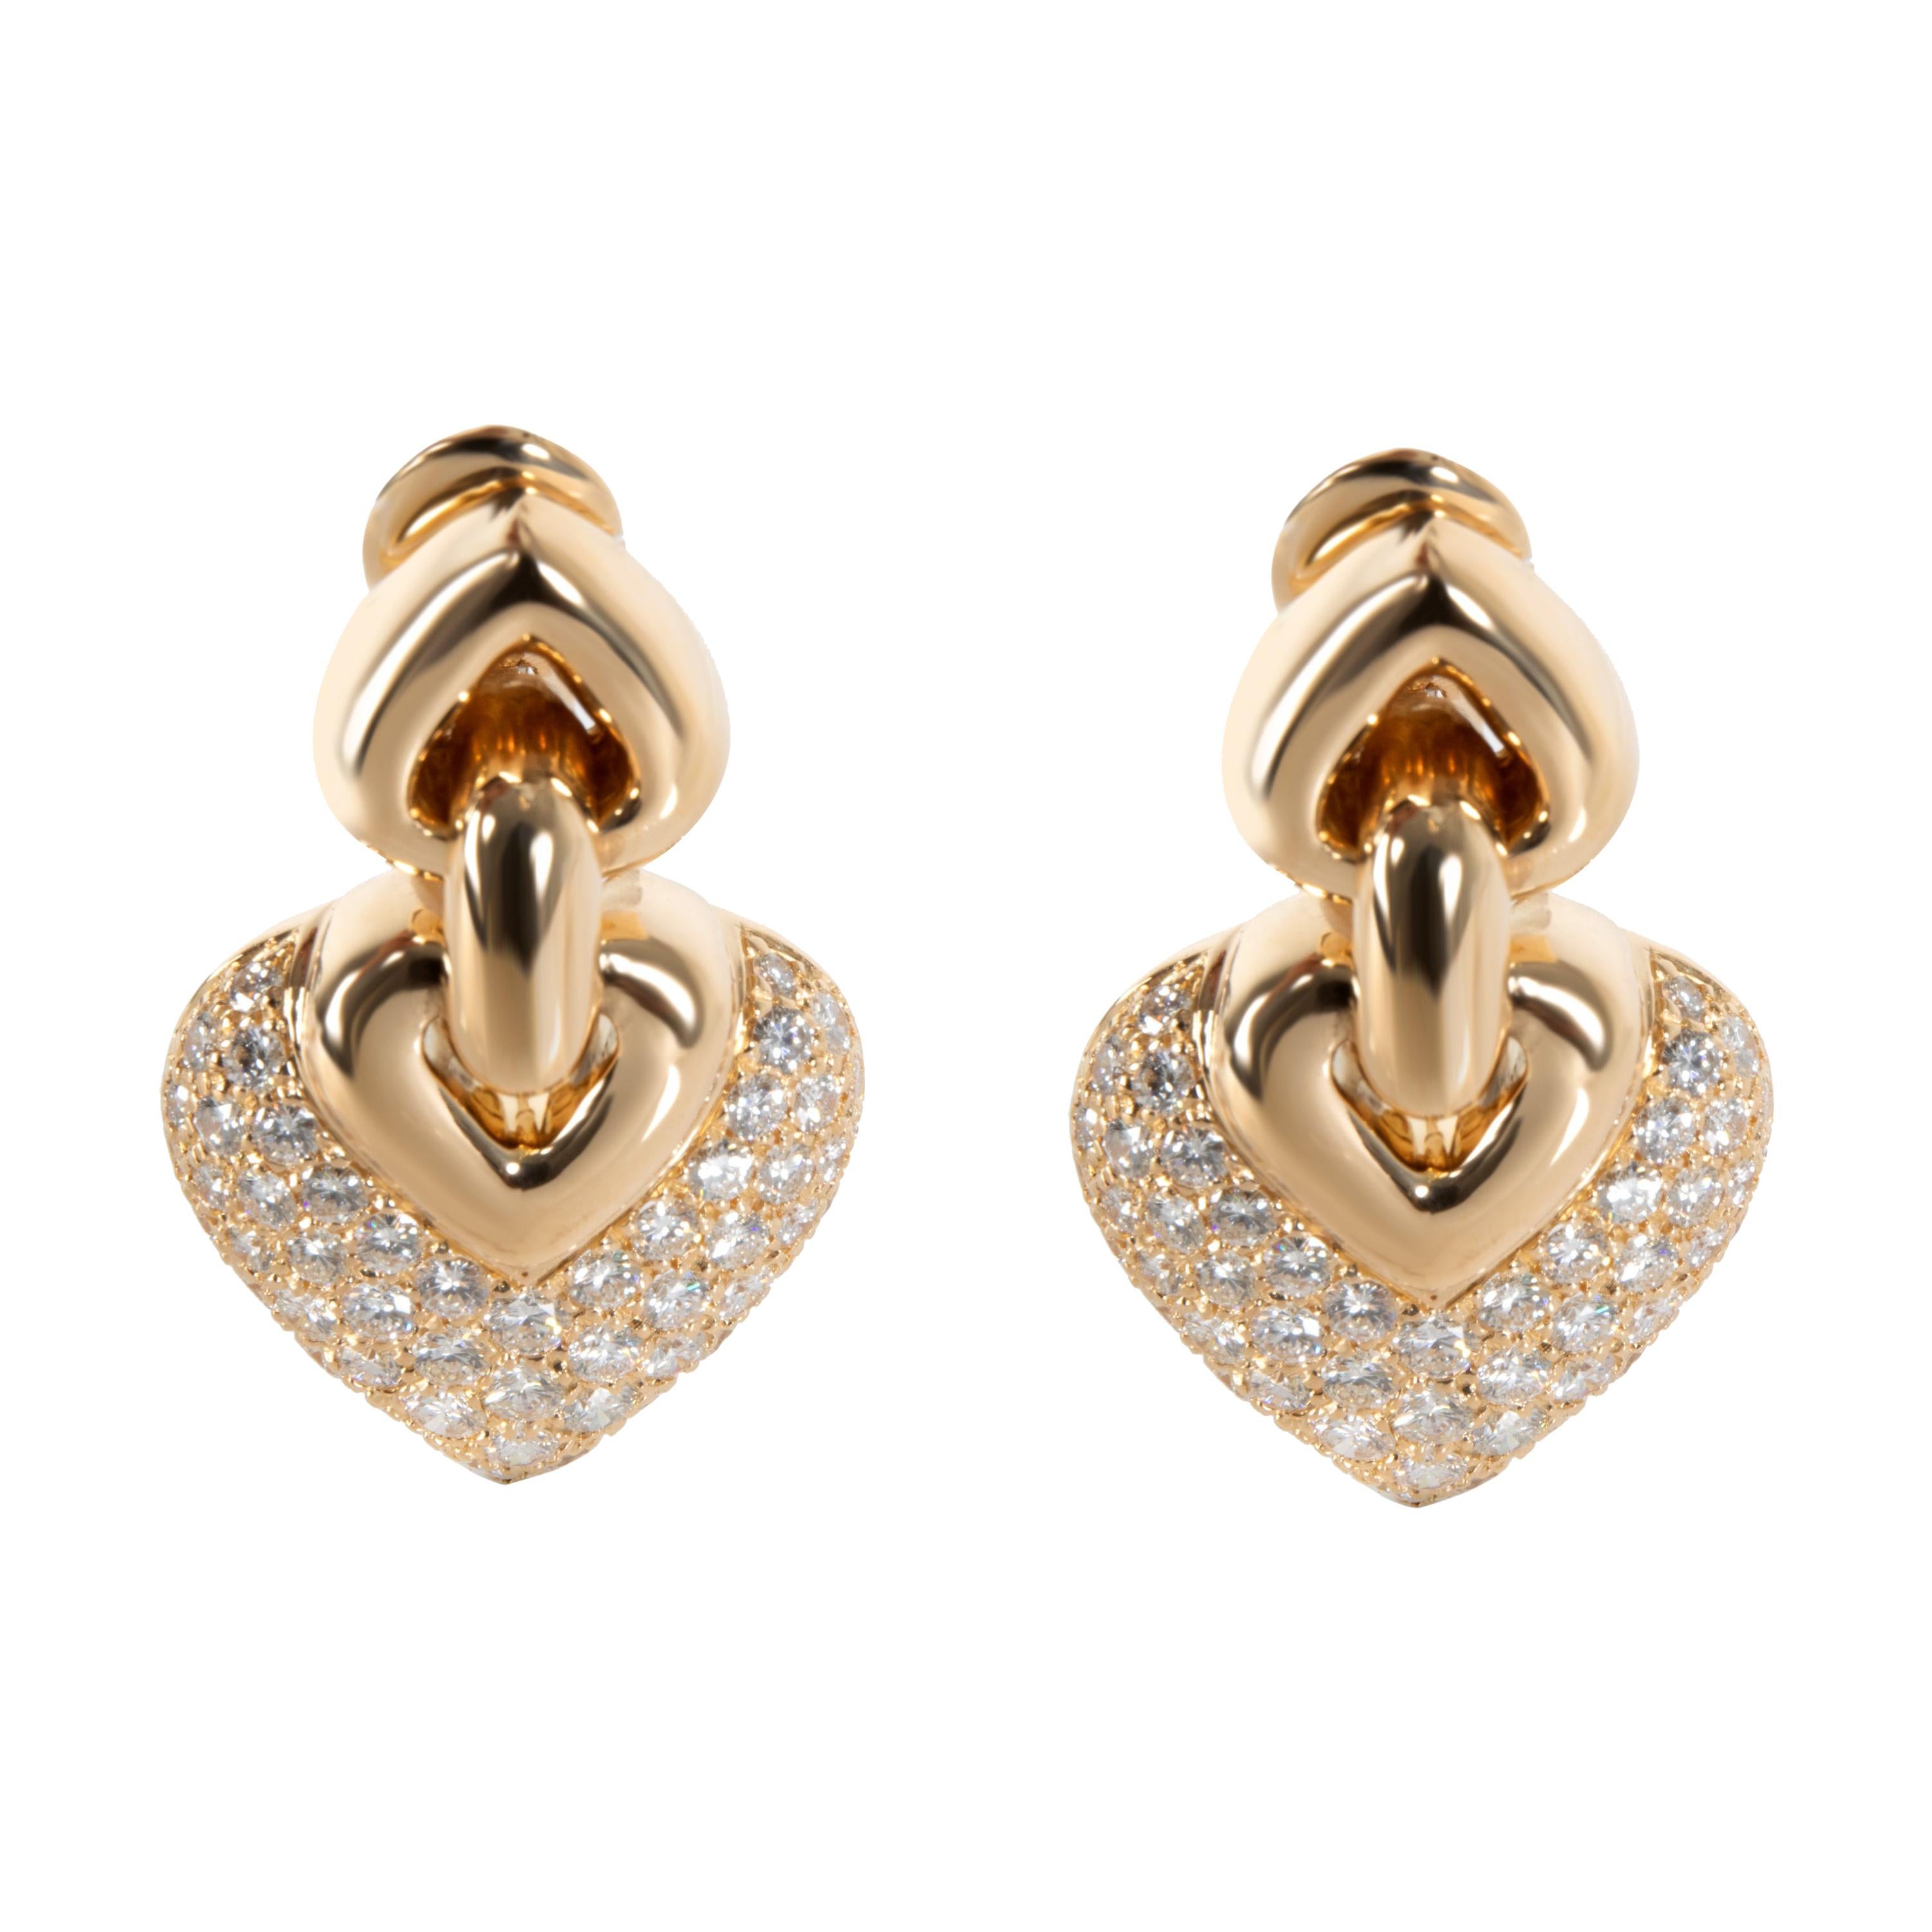 Bulgari Doppio Cuore Diamond Earrings in 18 Karat Yellow Gold 3.00 Carat